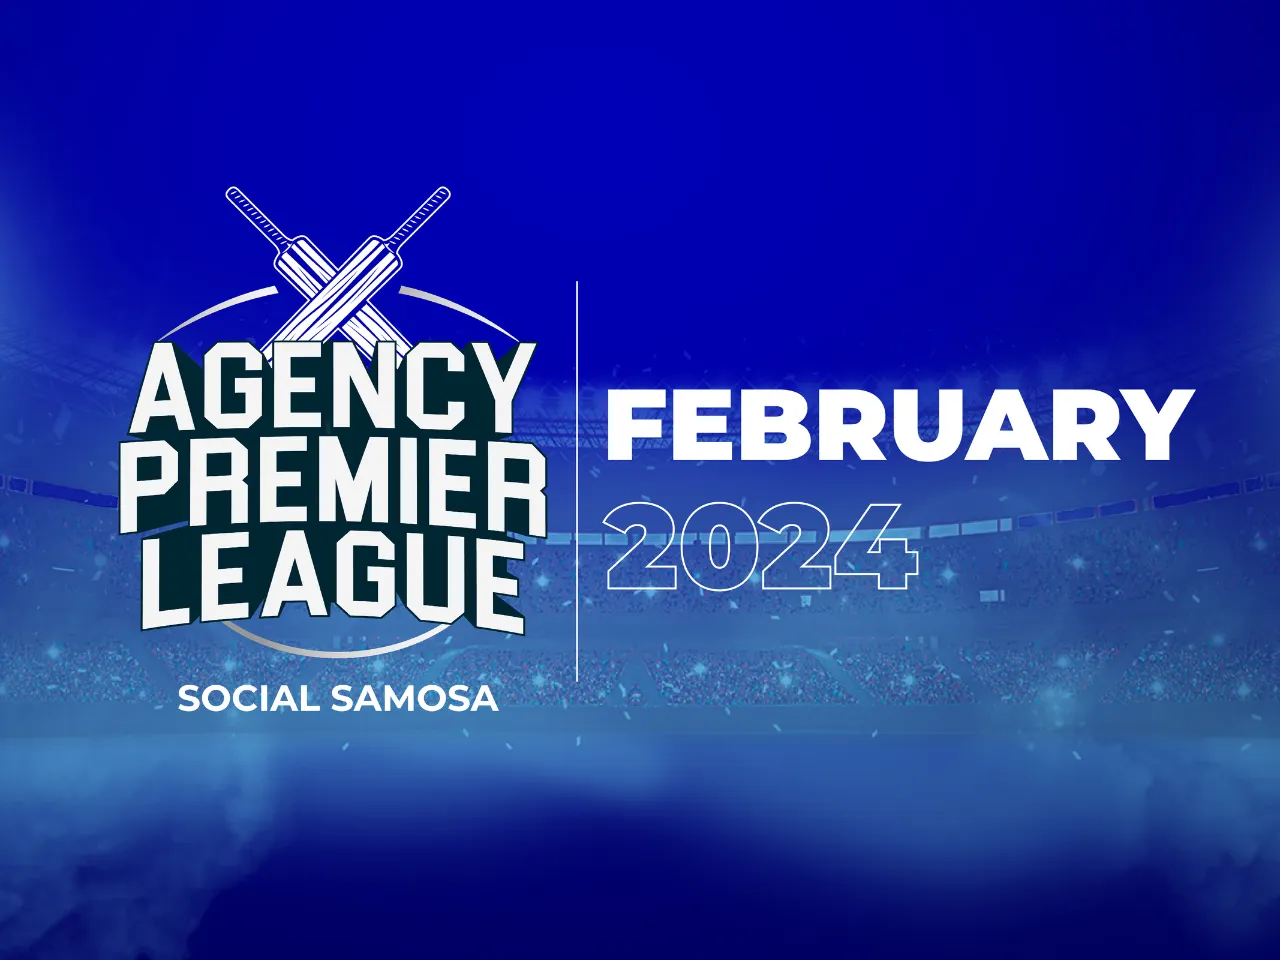 Agency premier League